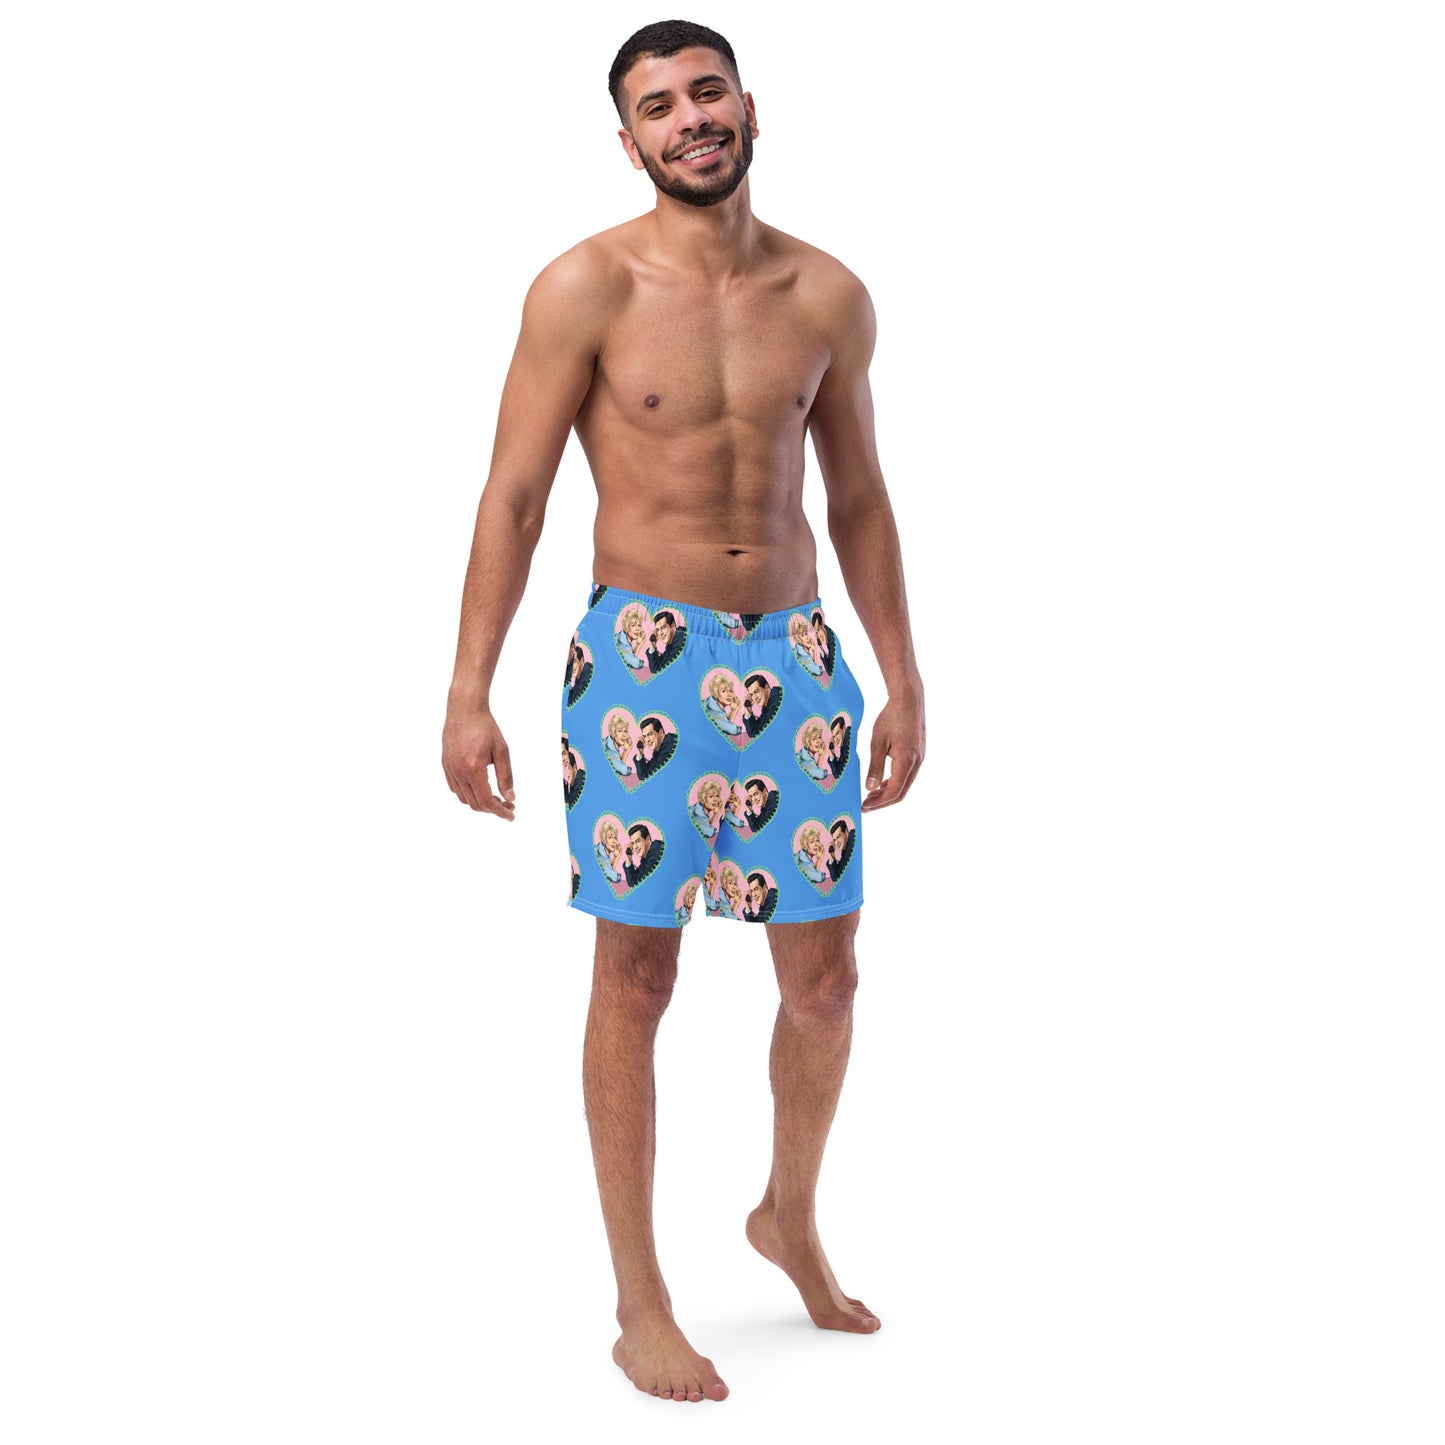 "The Party Line" Men's swim trunks